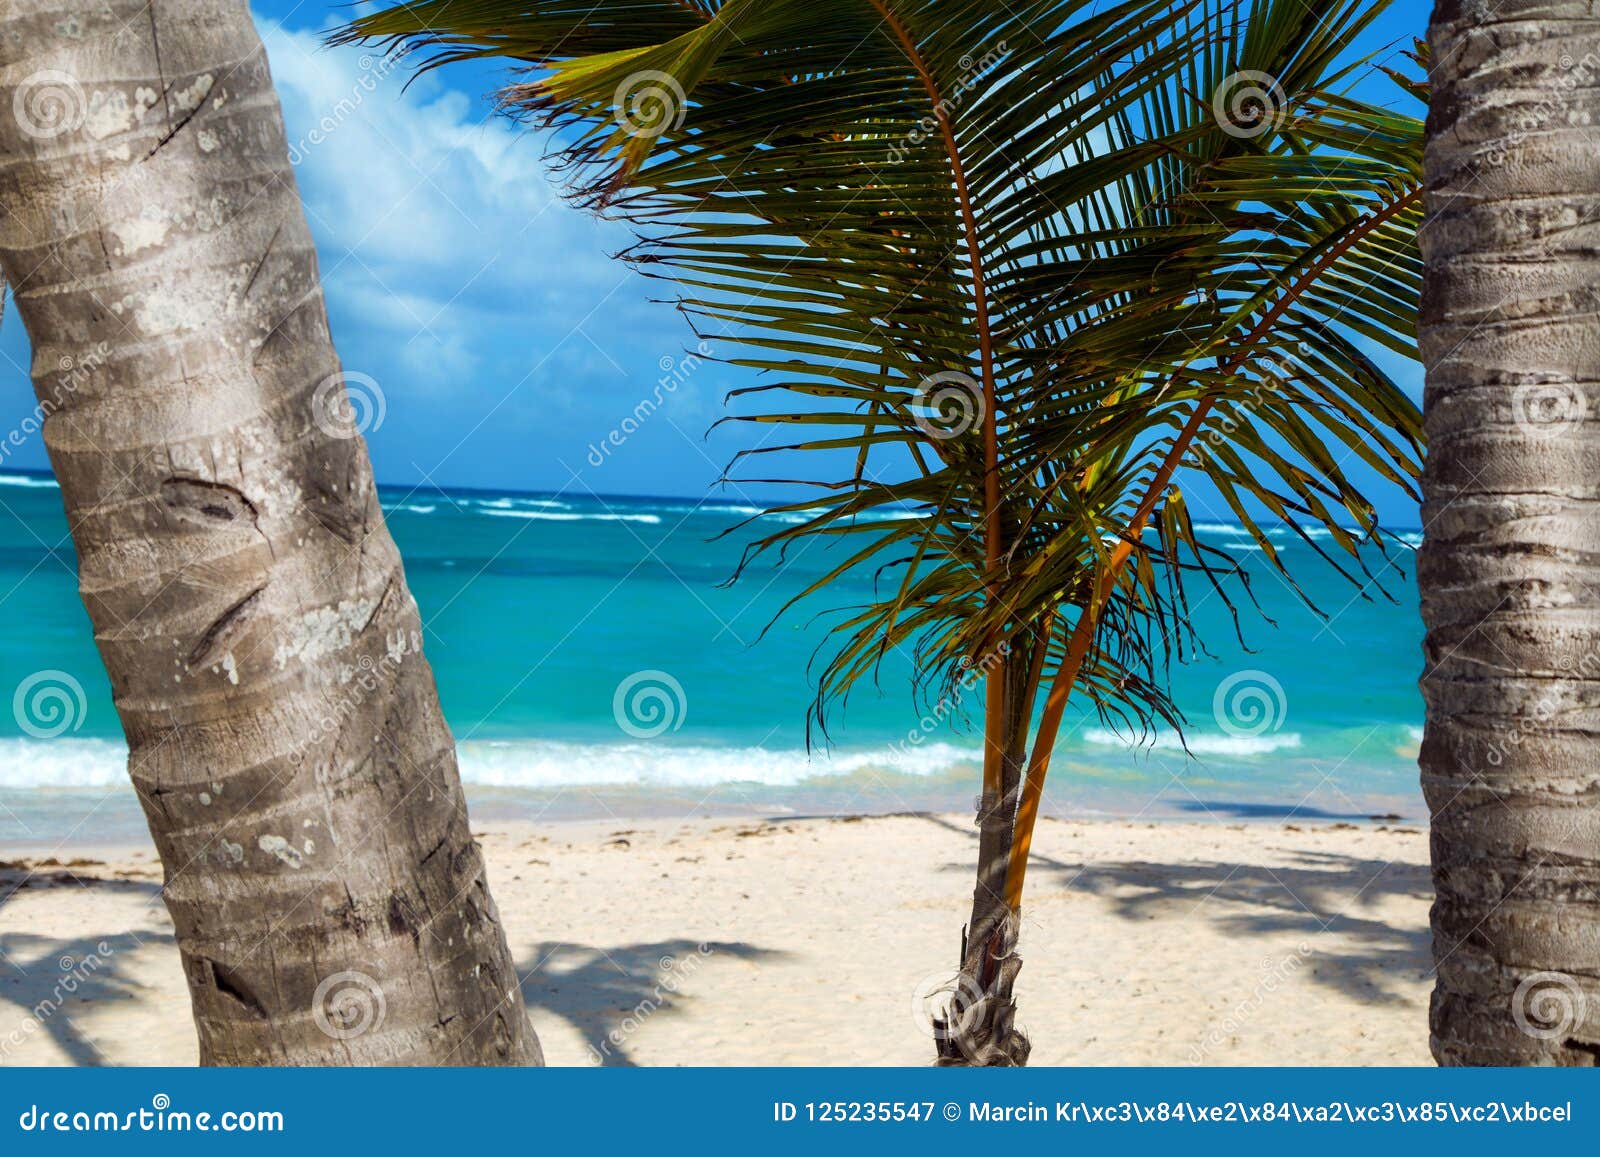 dominican republic, punta cana, saona island - mano juan beach. fishermen`s village